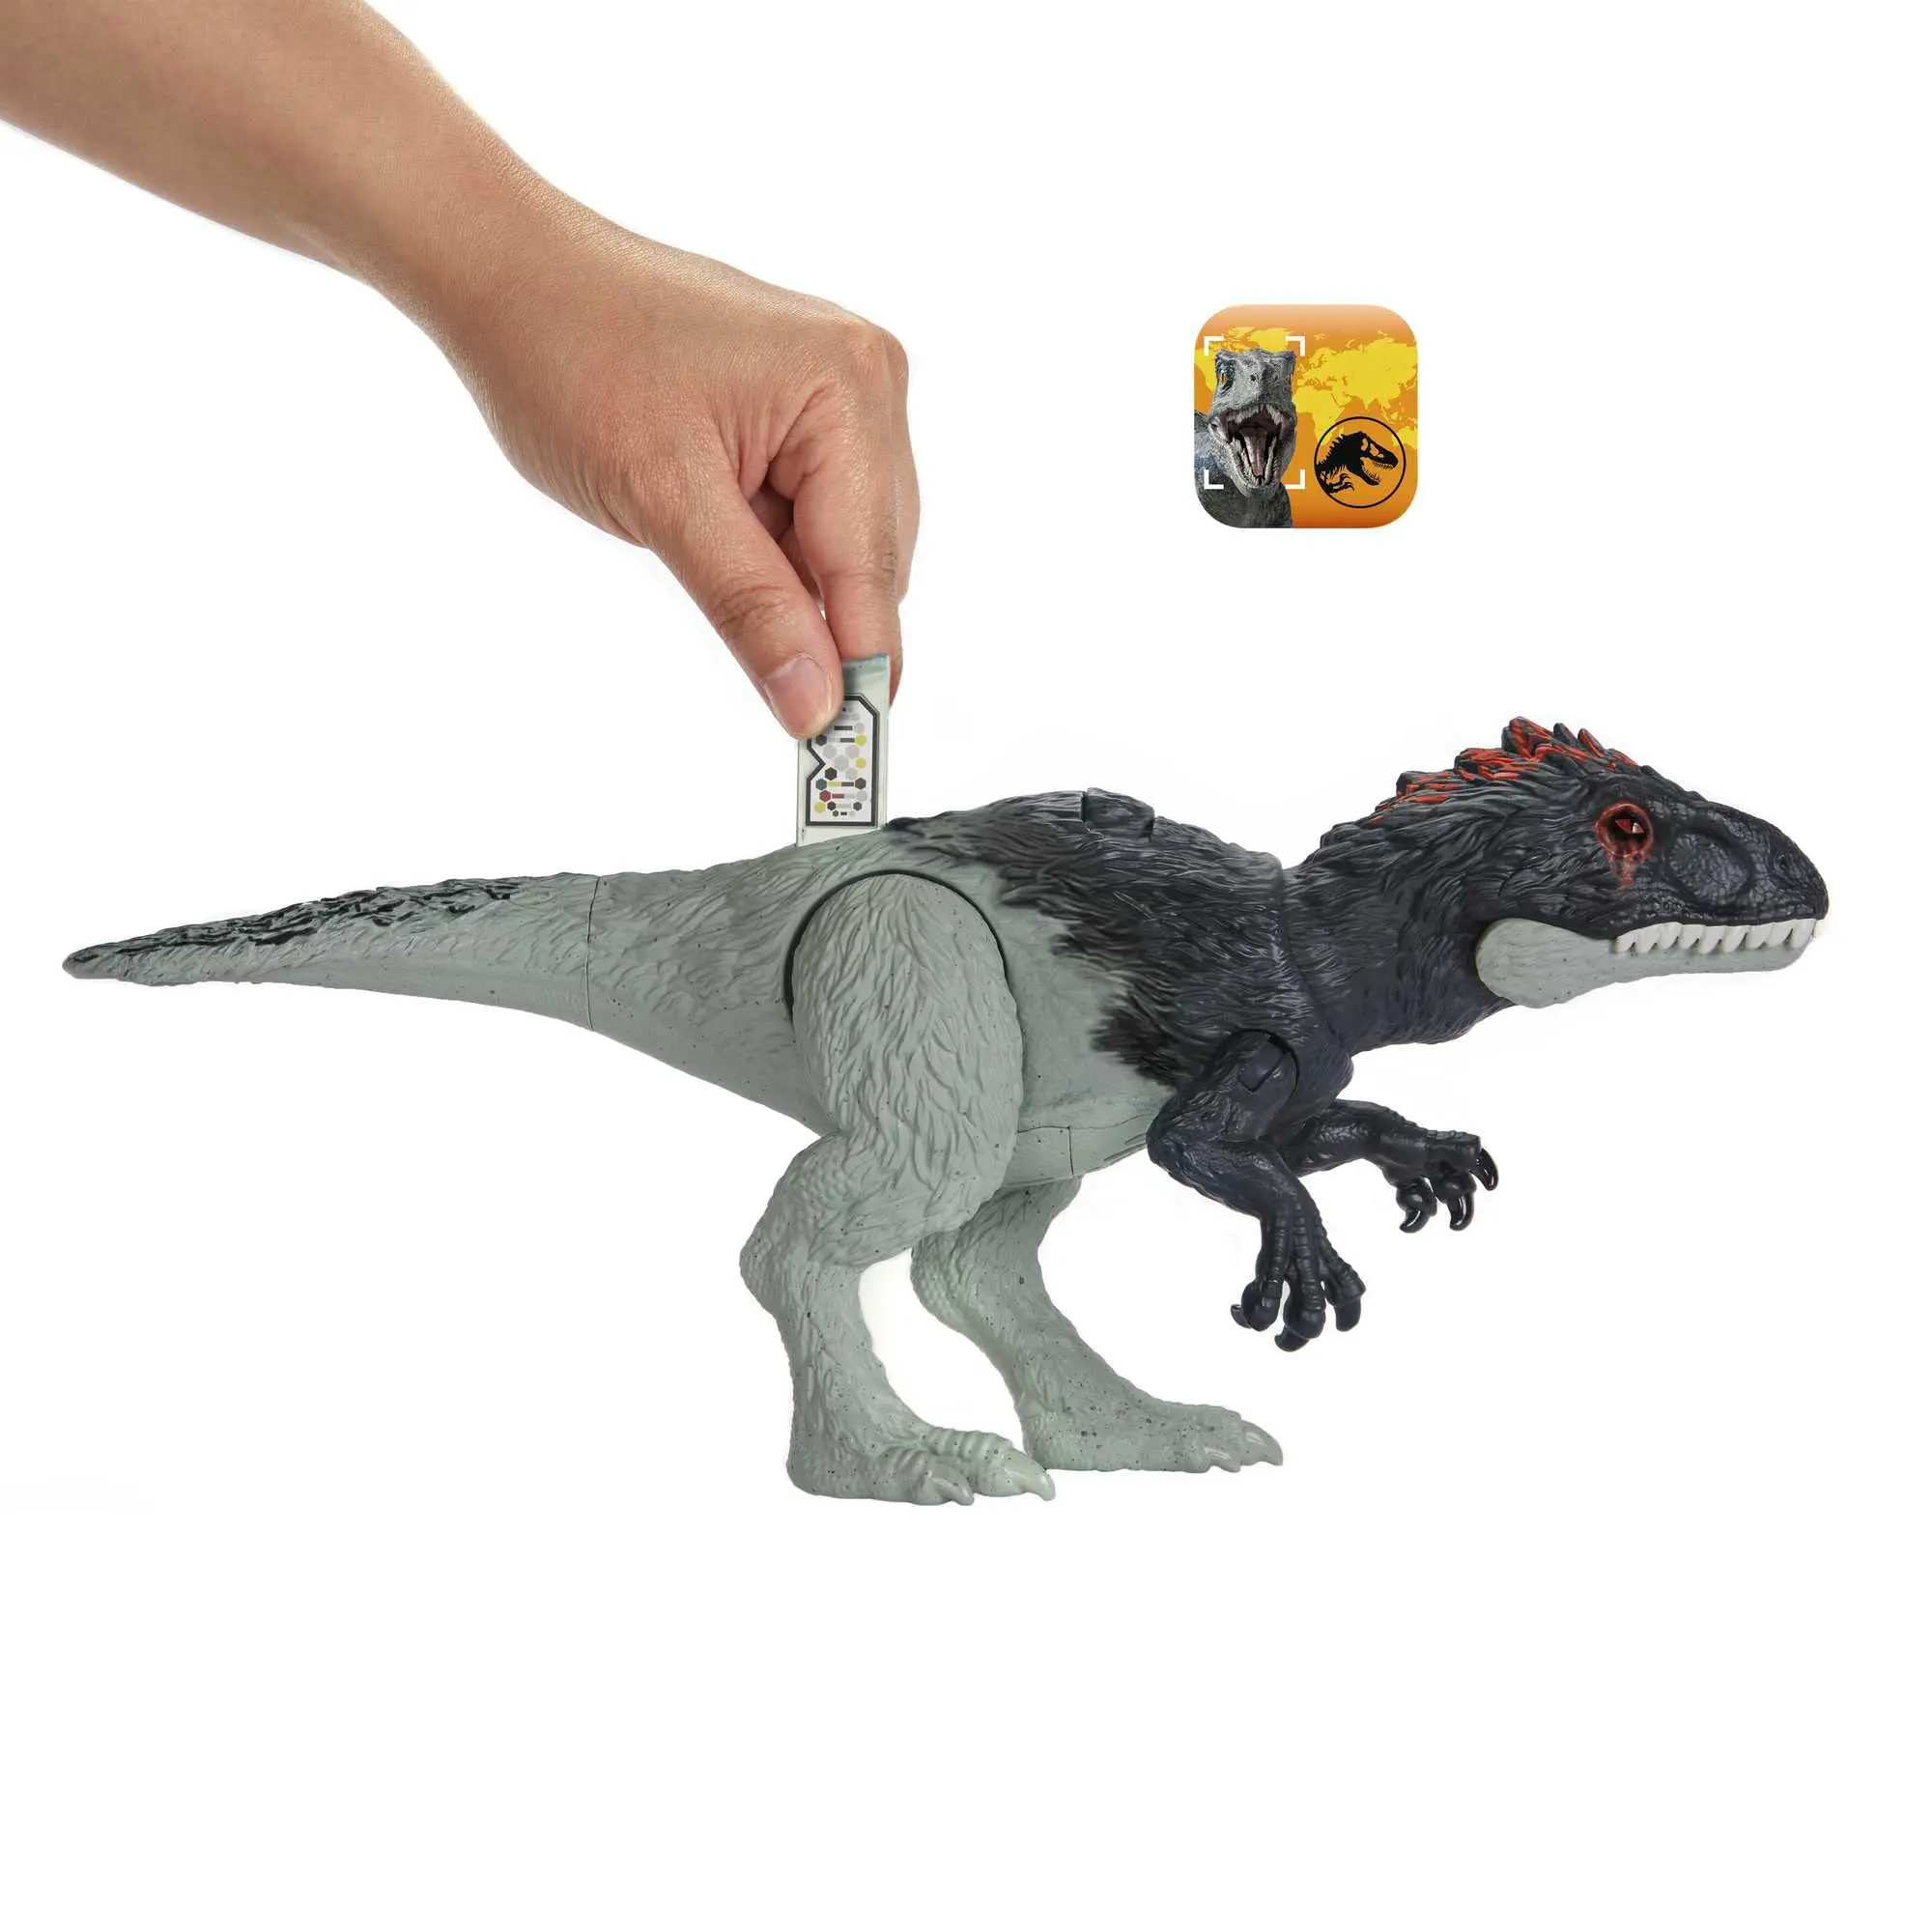 Jurassic World Dominion Dinosaur Figure Kronosaurus Wild Roar with Sound & Attack Action Medium Size Posable Toy Gift HLP17 enlarge